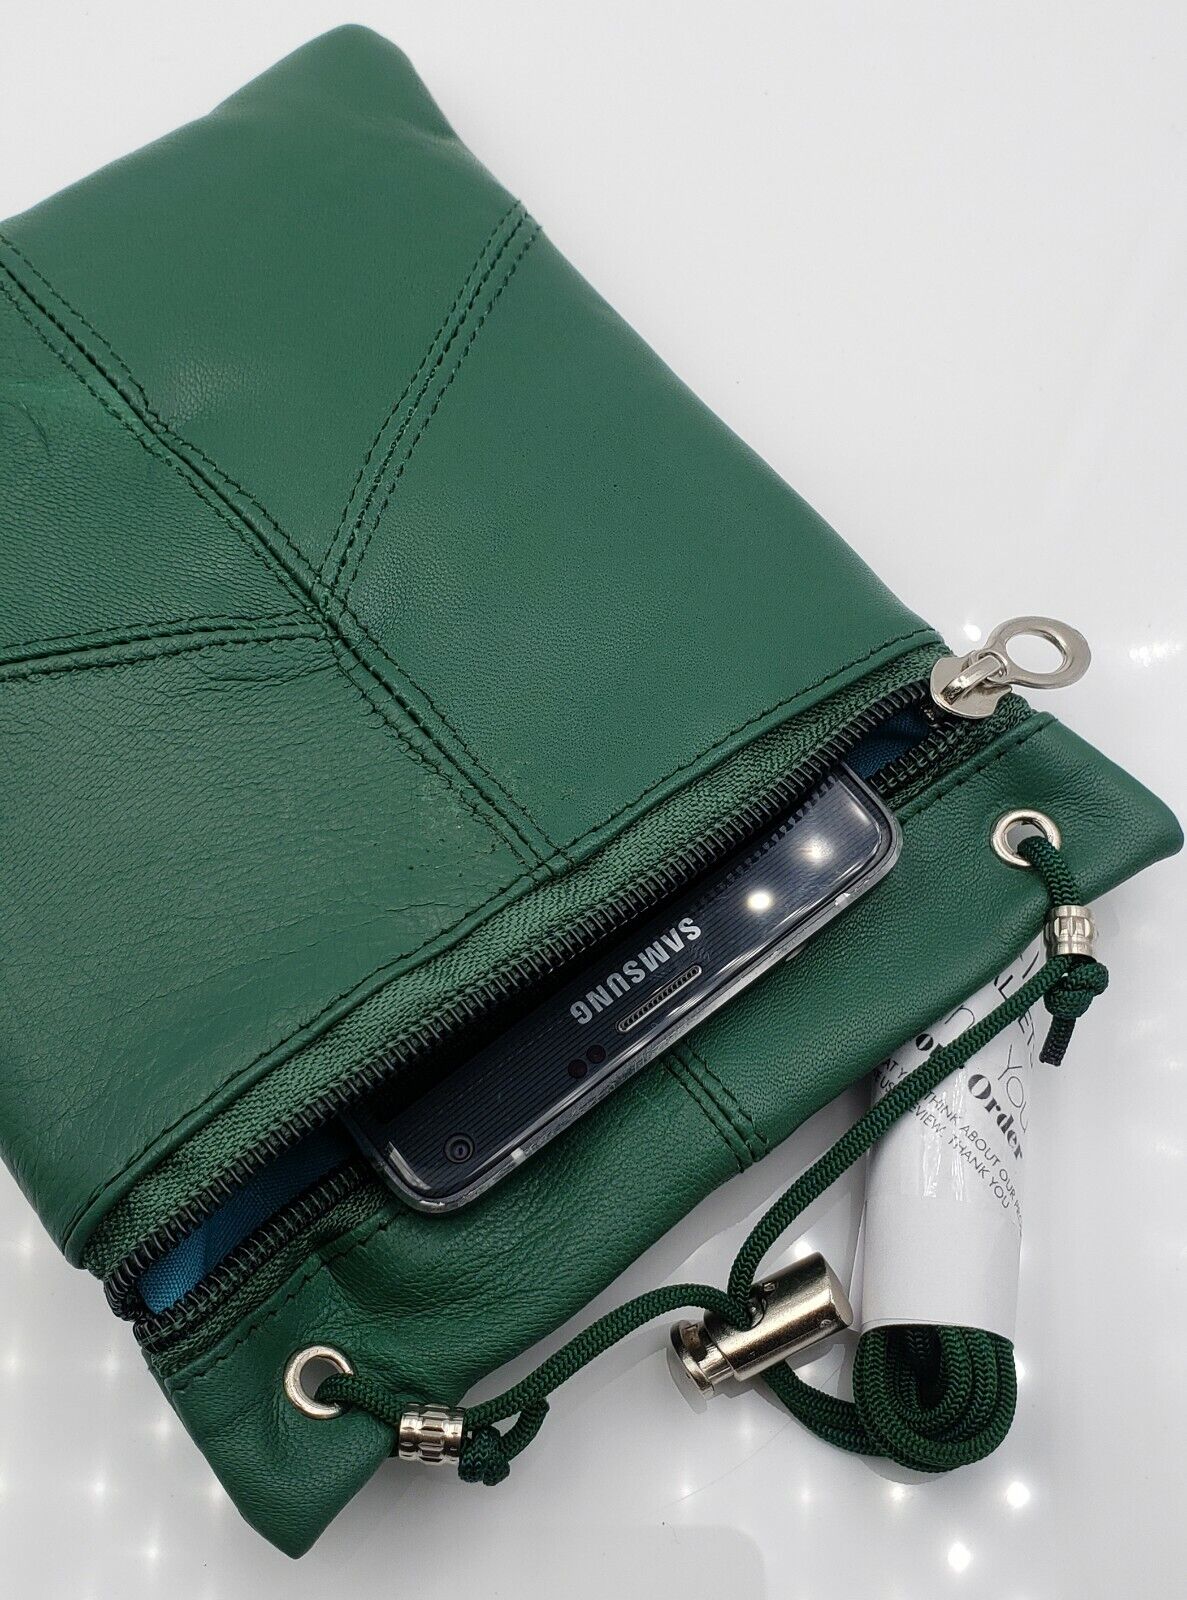 Brand New Genuine Leather PASSPORT ID Documents Holder Neck Travel Pouch Bag ag wallets 015 - фотография #5